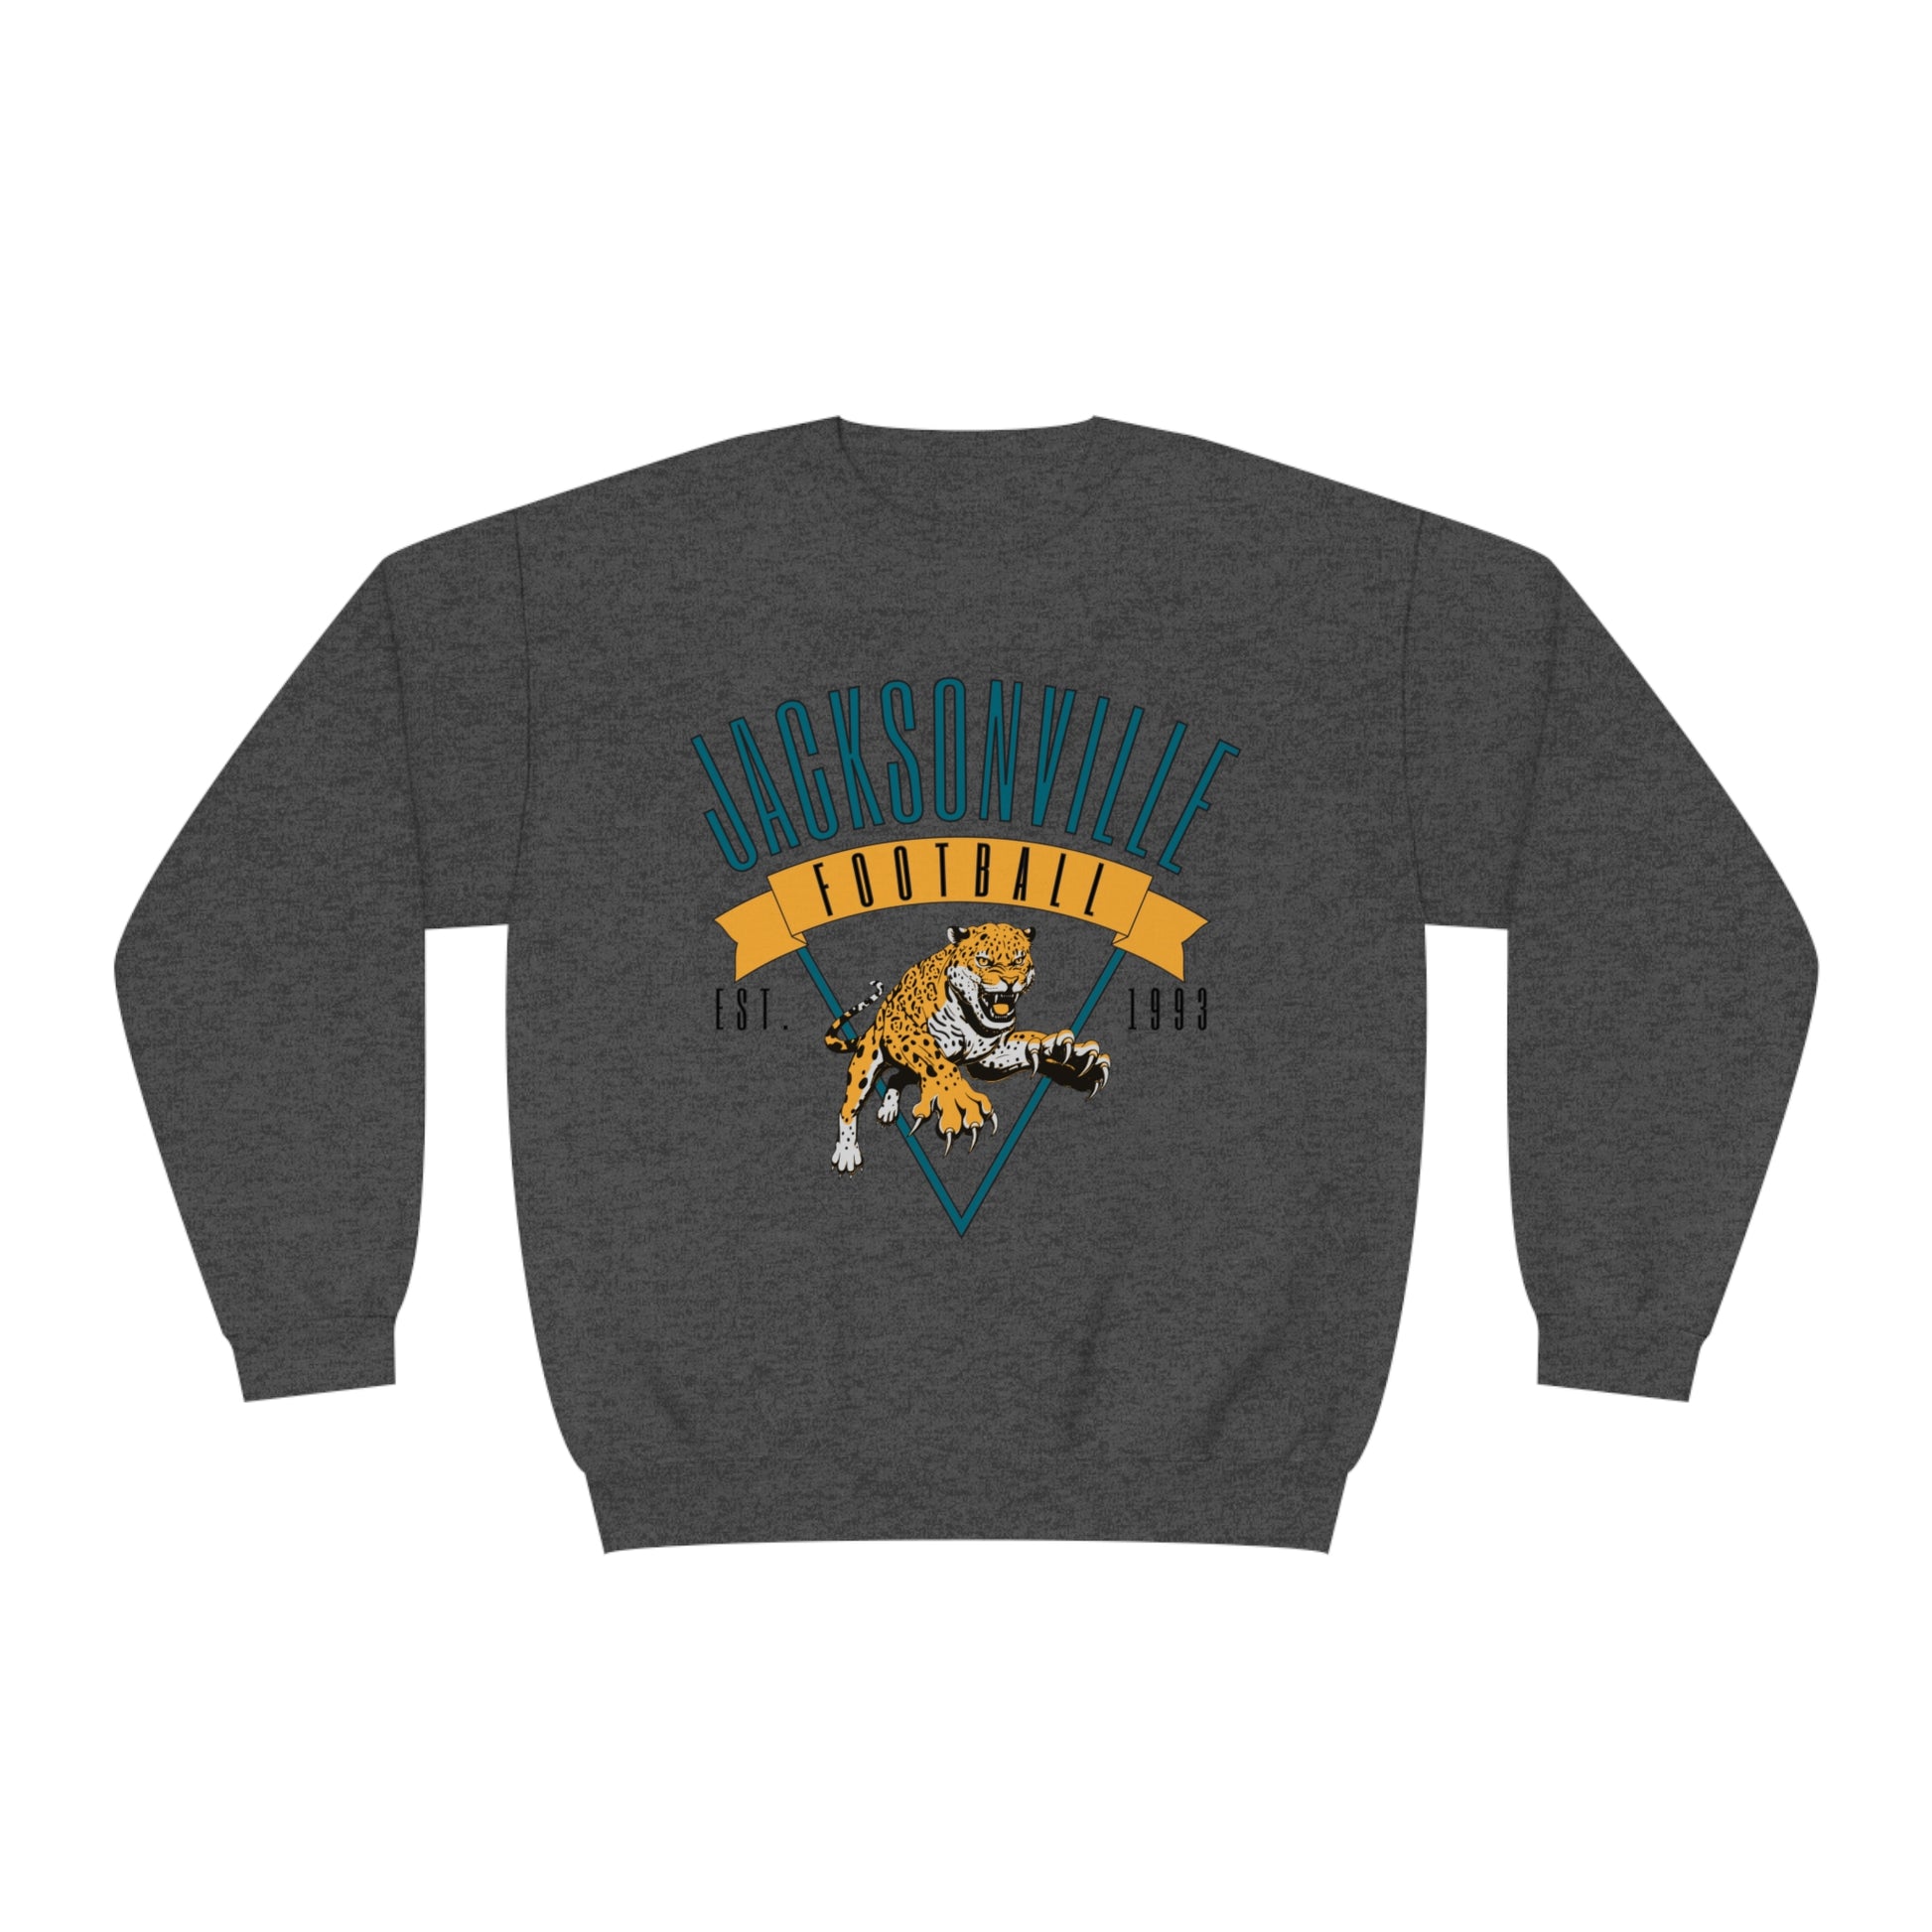 Vintage Jacksonville Jaguars Crewneck Sweatshirt - Retro Football Short Sleeve Oversized Men's & Women's - Design 